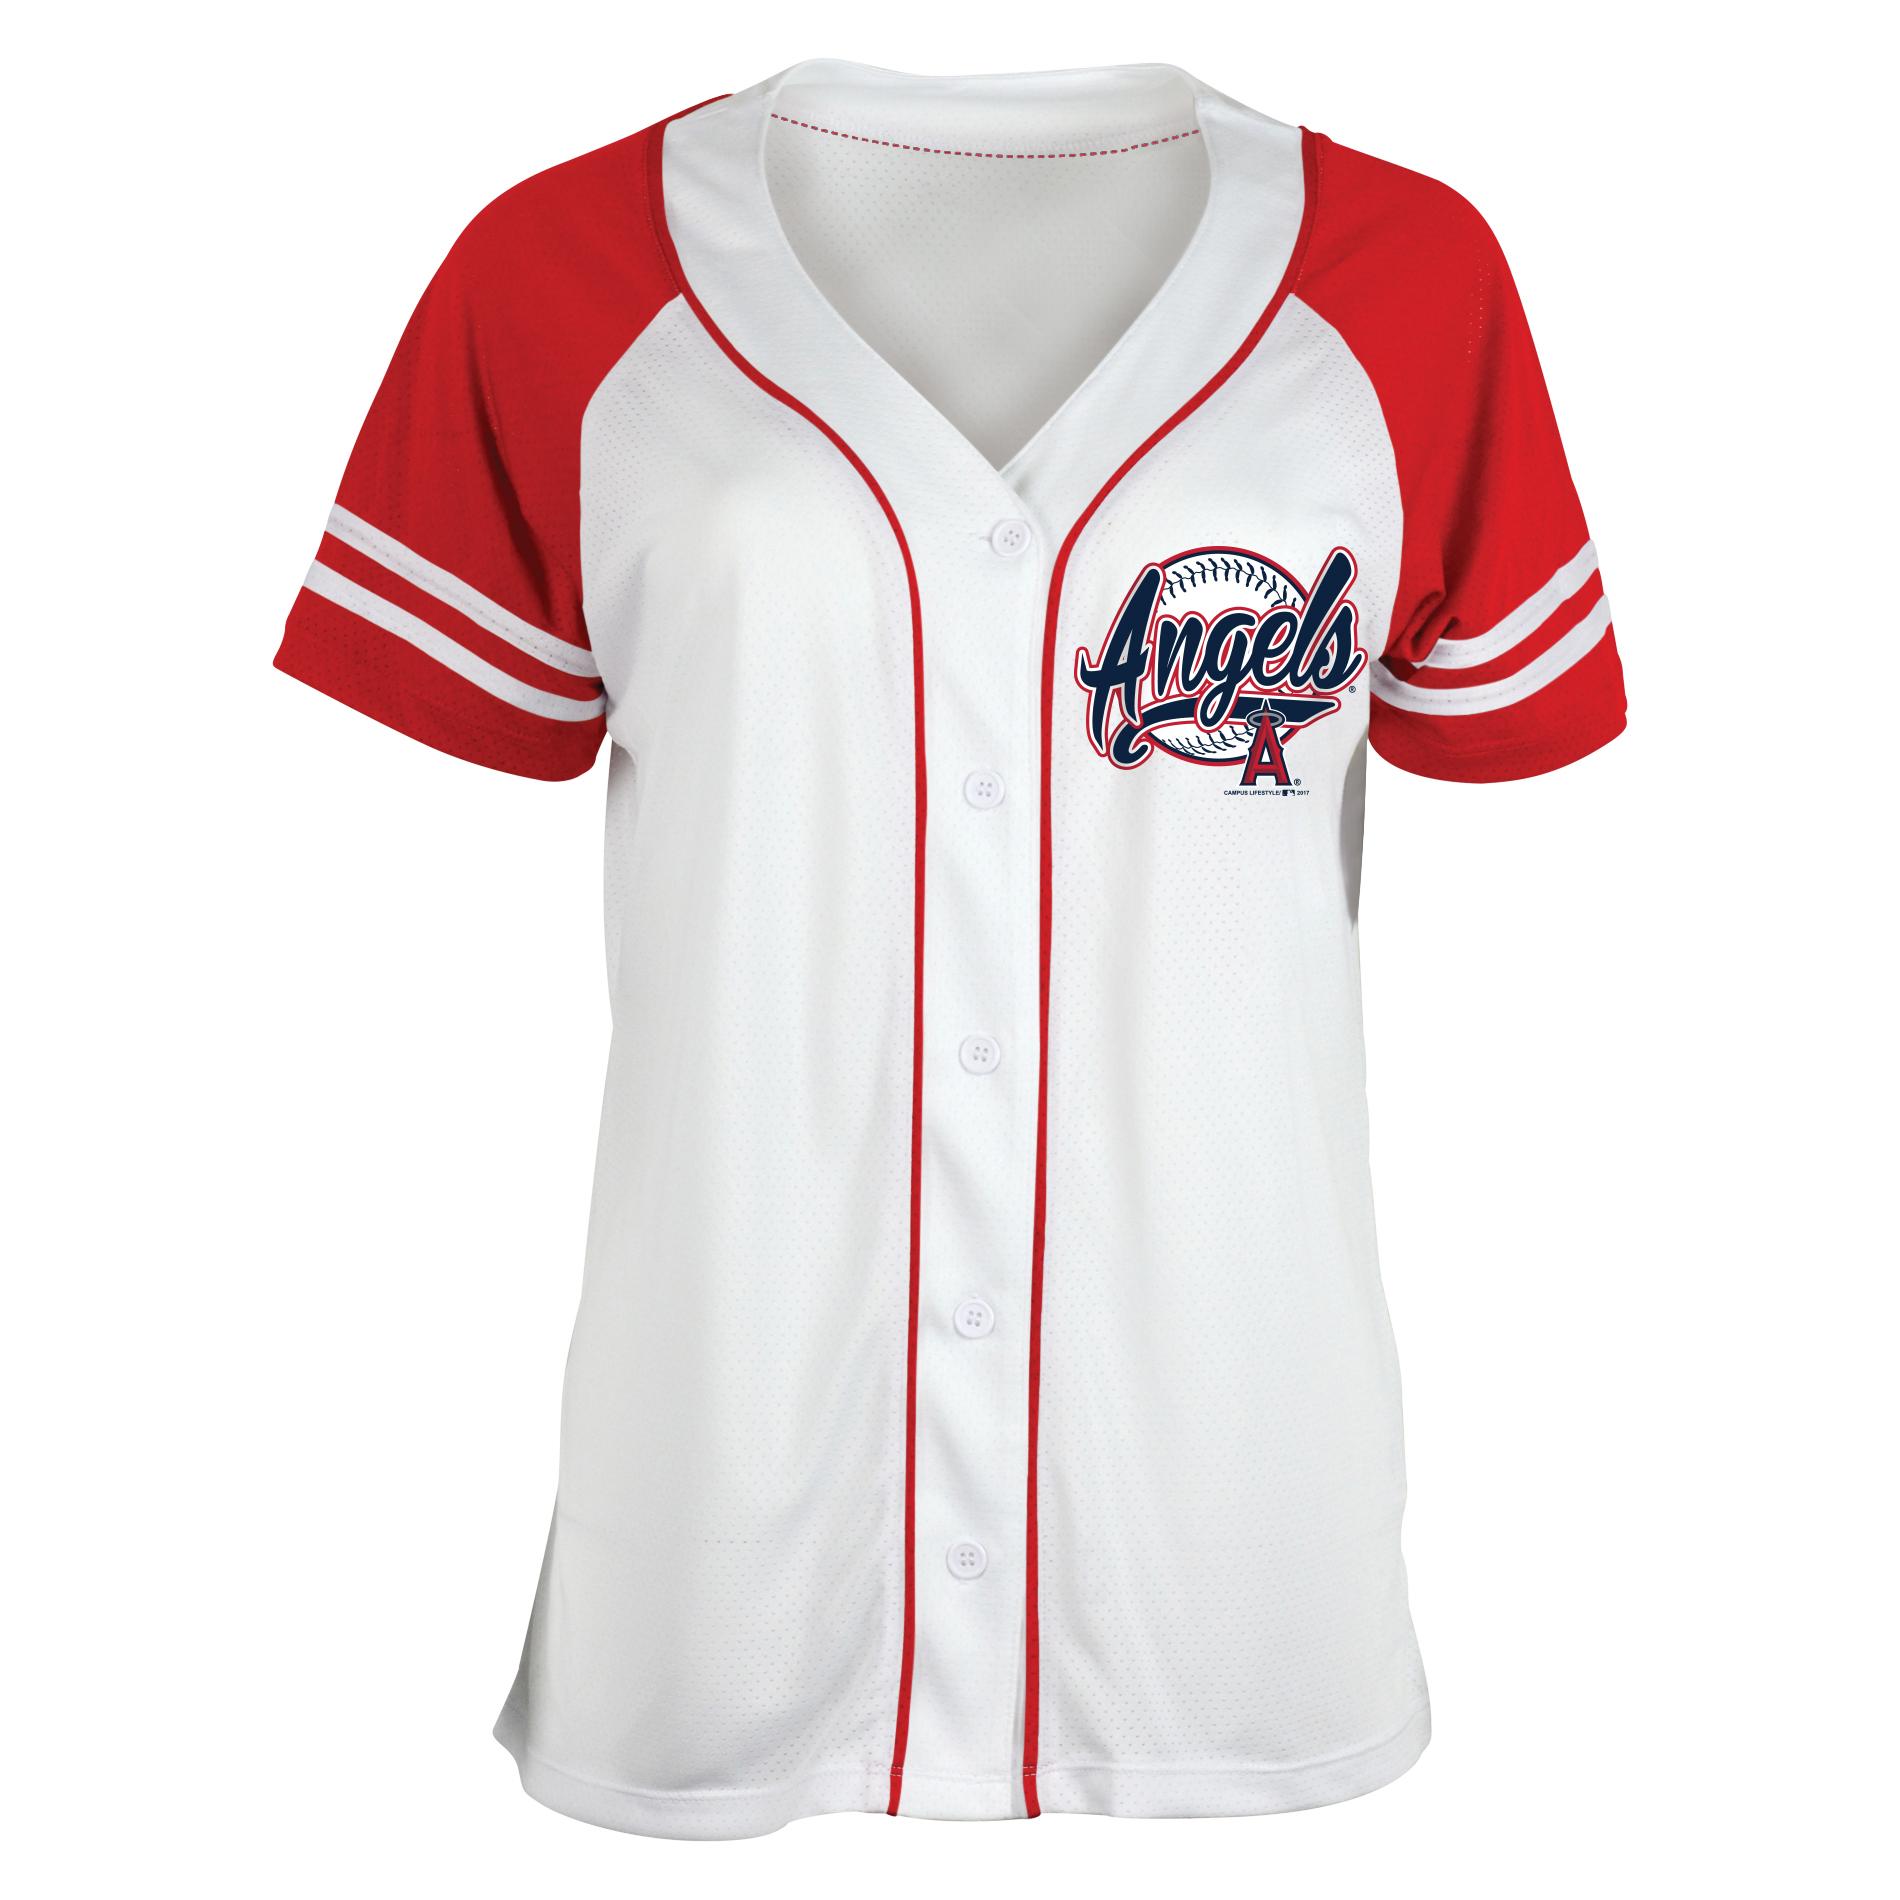 angels baseball jerseys